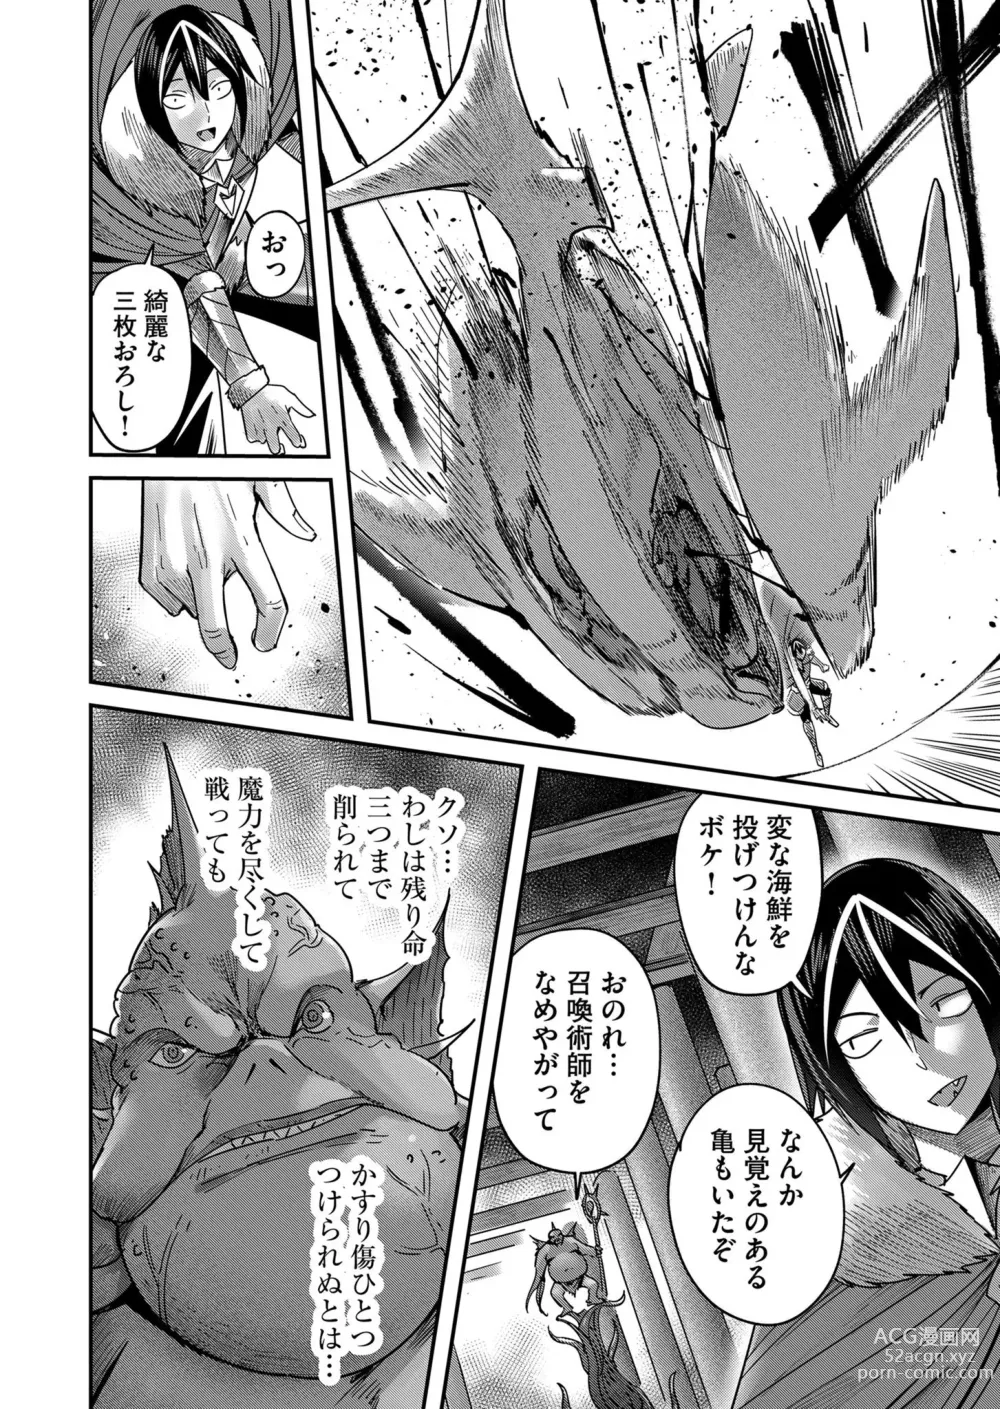 Page 28 of manga Kichiku Eiyuu Vol.02